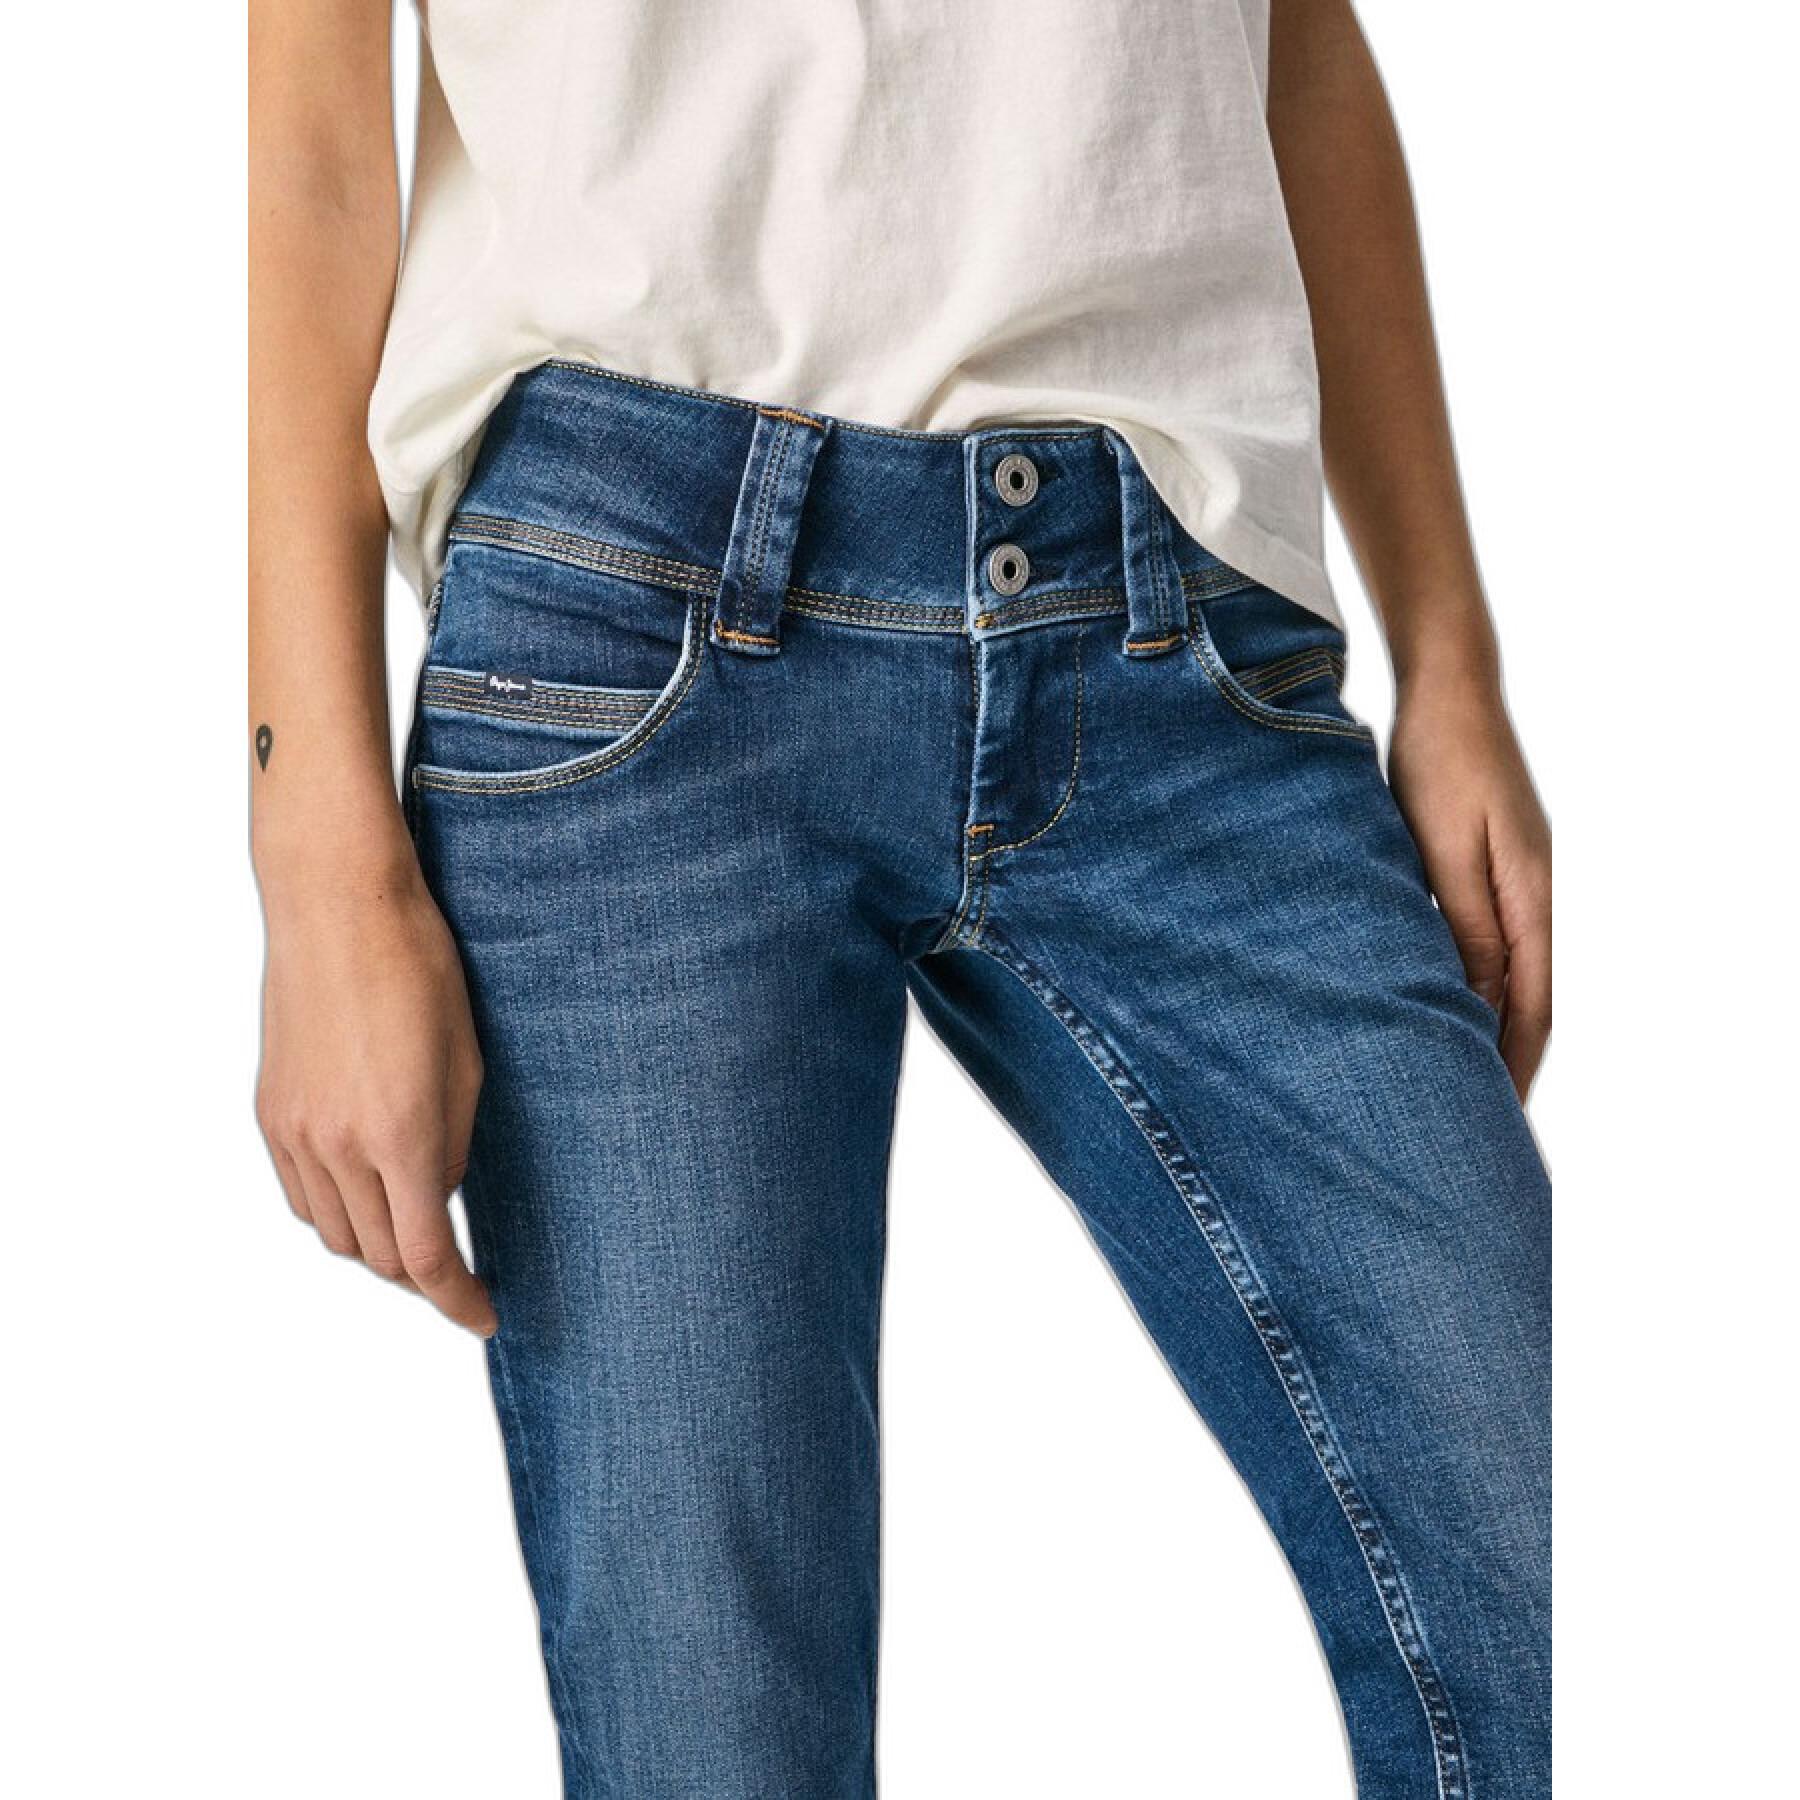 Women's jeans Pepe Jeans Venus